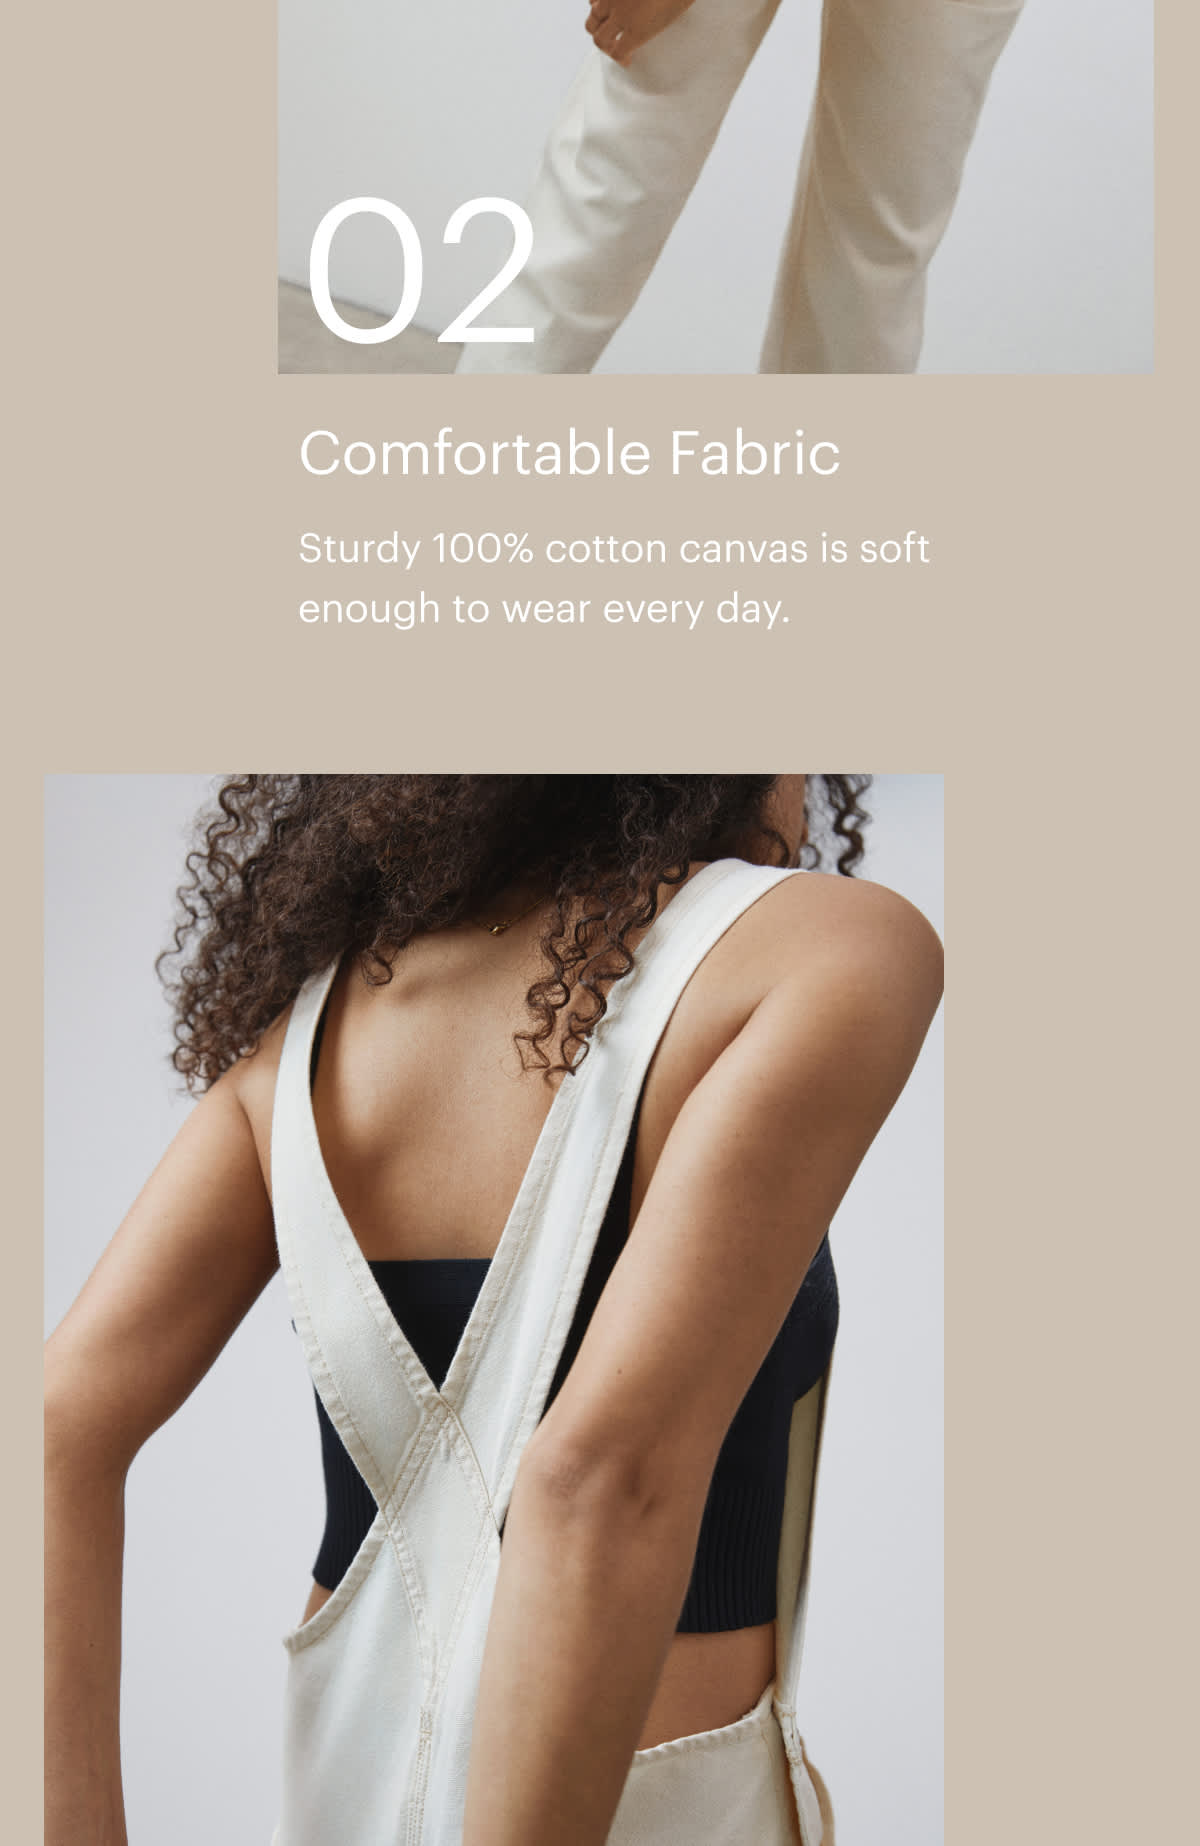 Comfortable Fabric